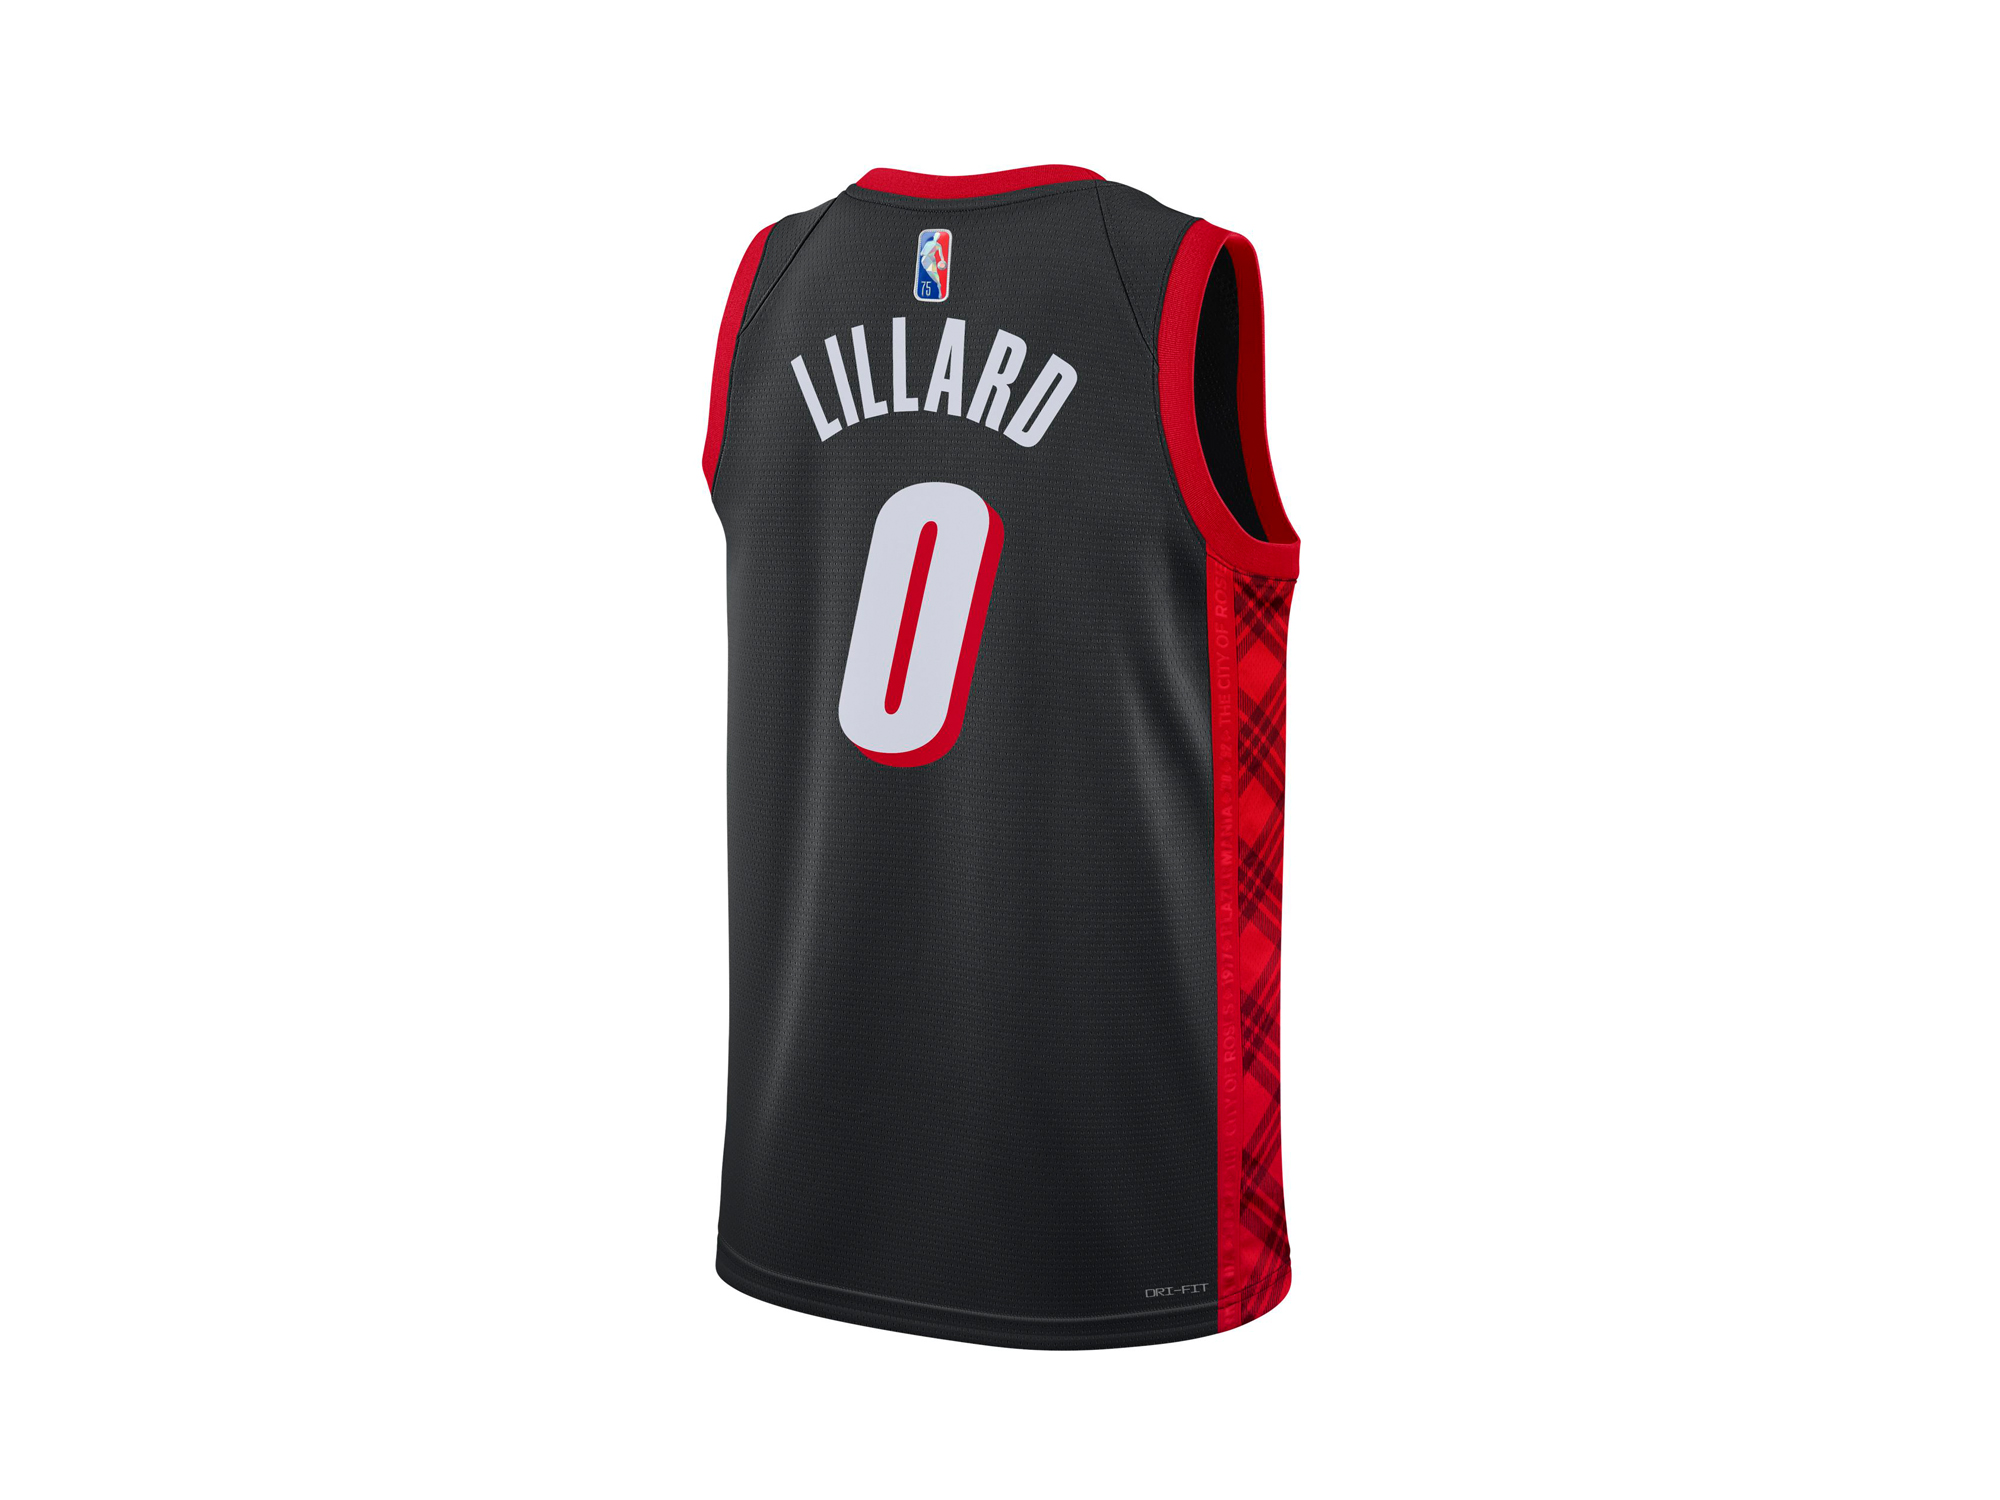 Nike Damian Lillard NBA City Edition Swingman Jersey 